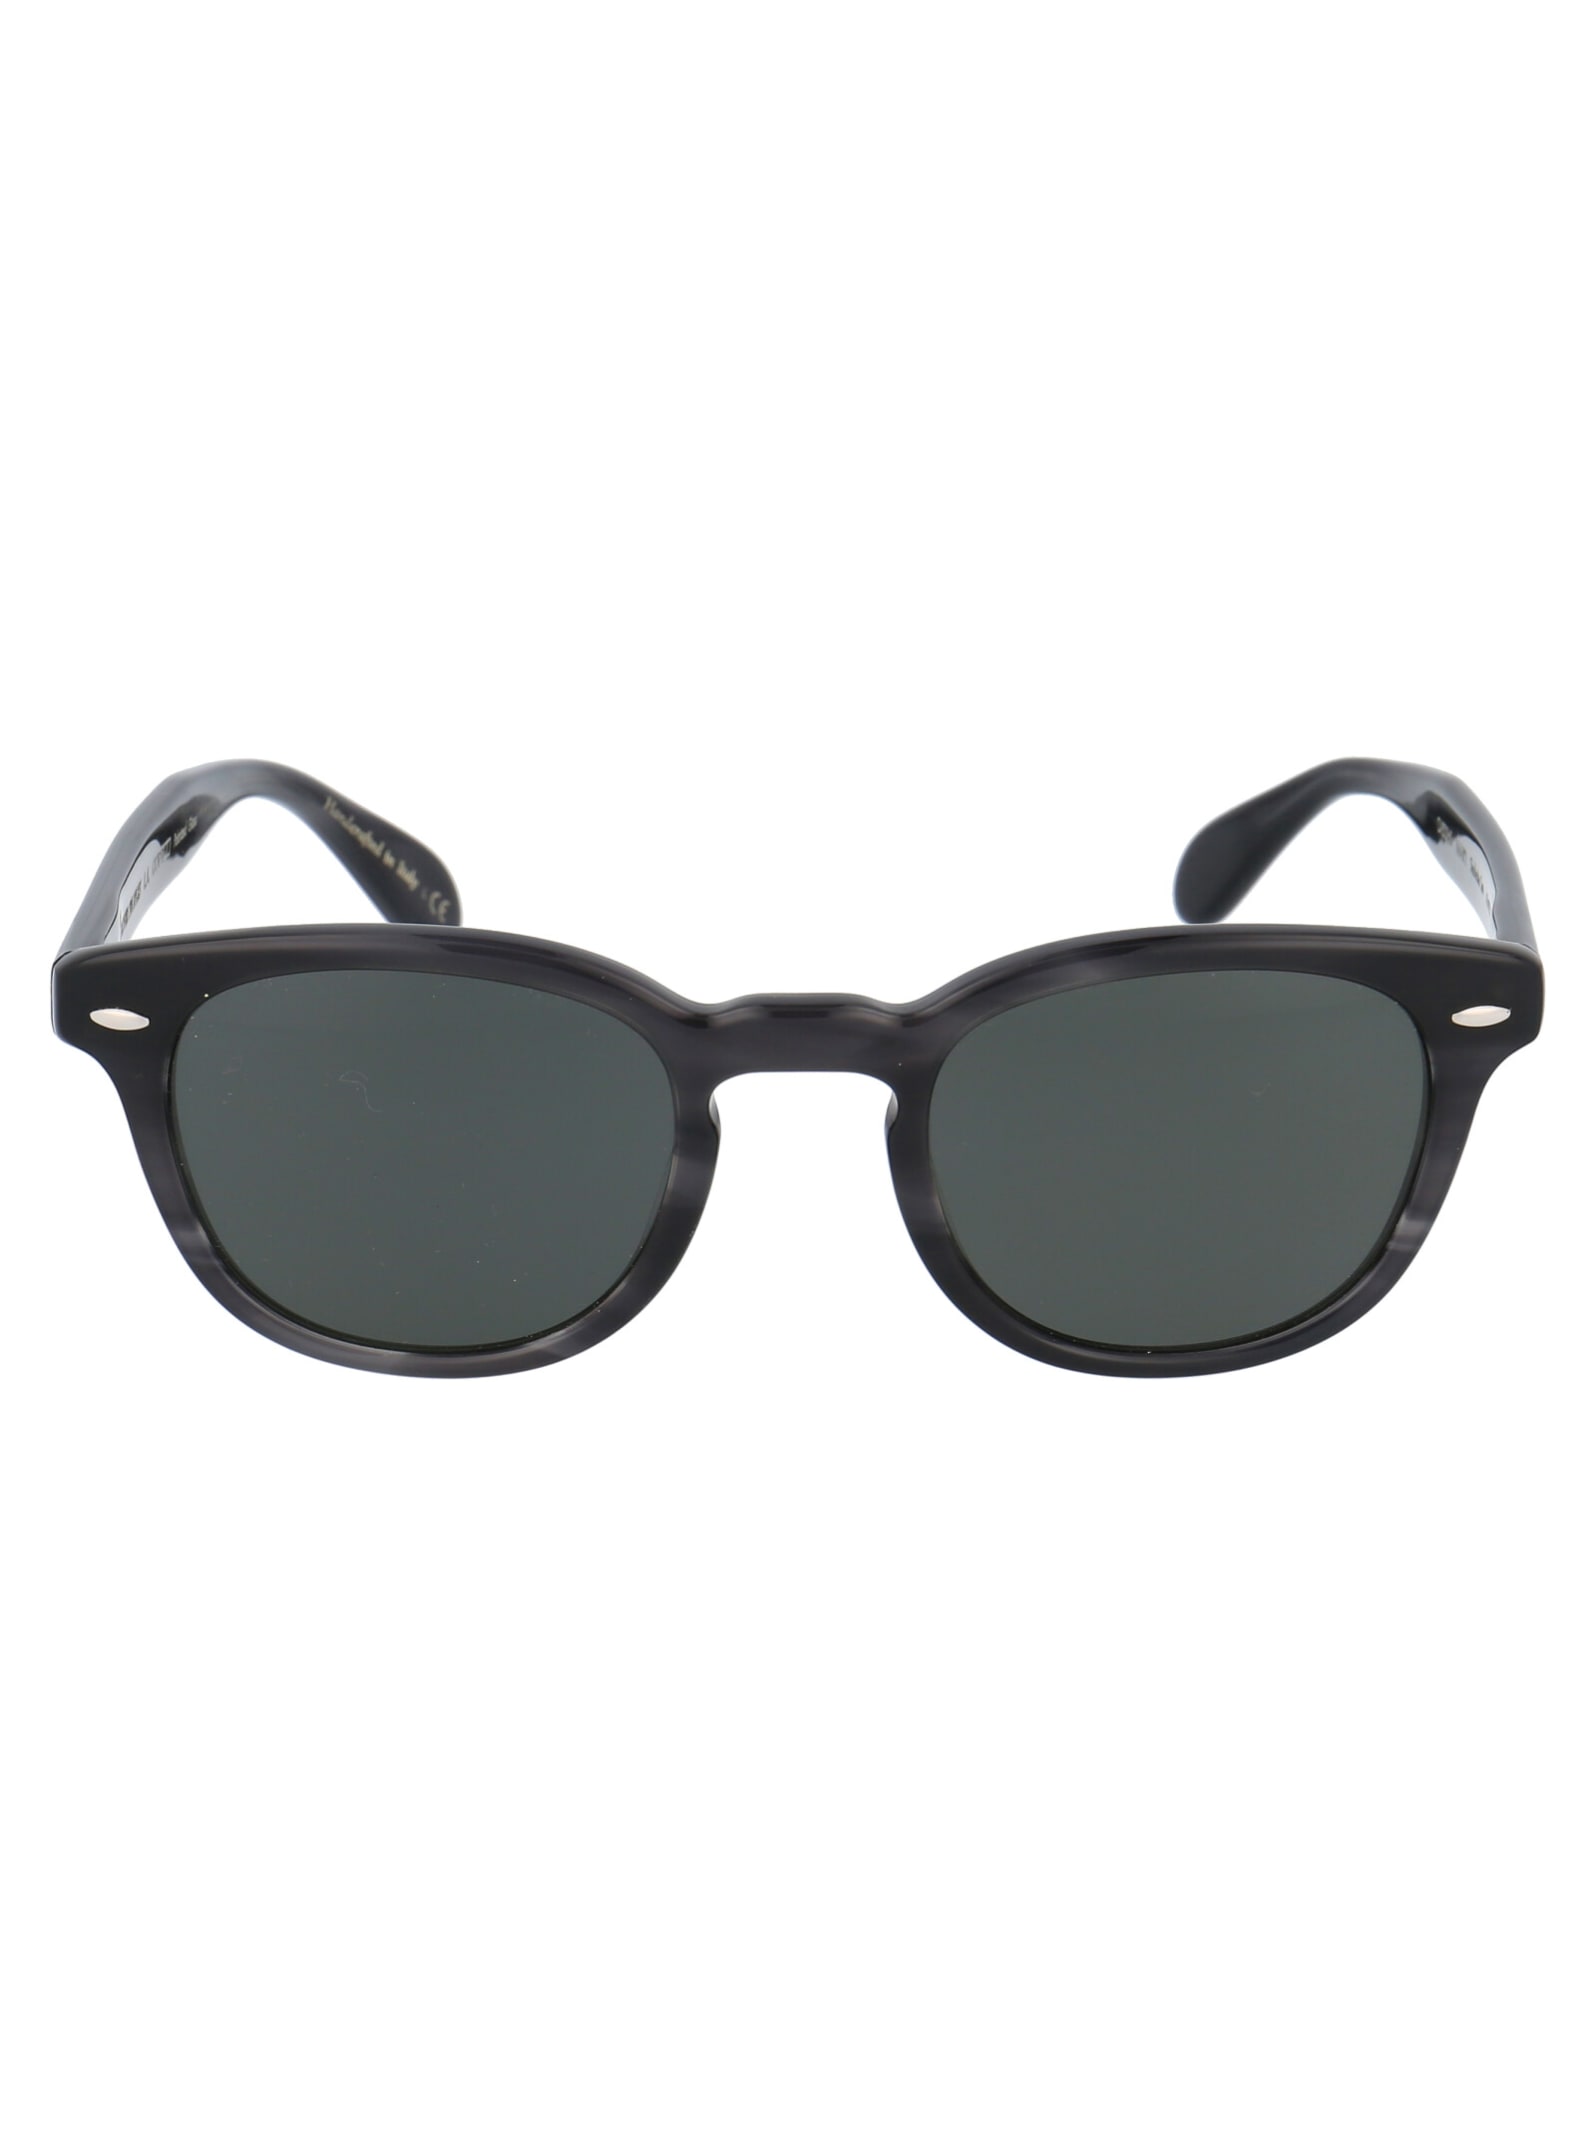 Oliver Peoples Sheldrake Sun Sunglasses